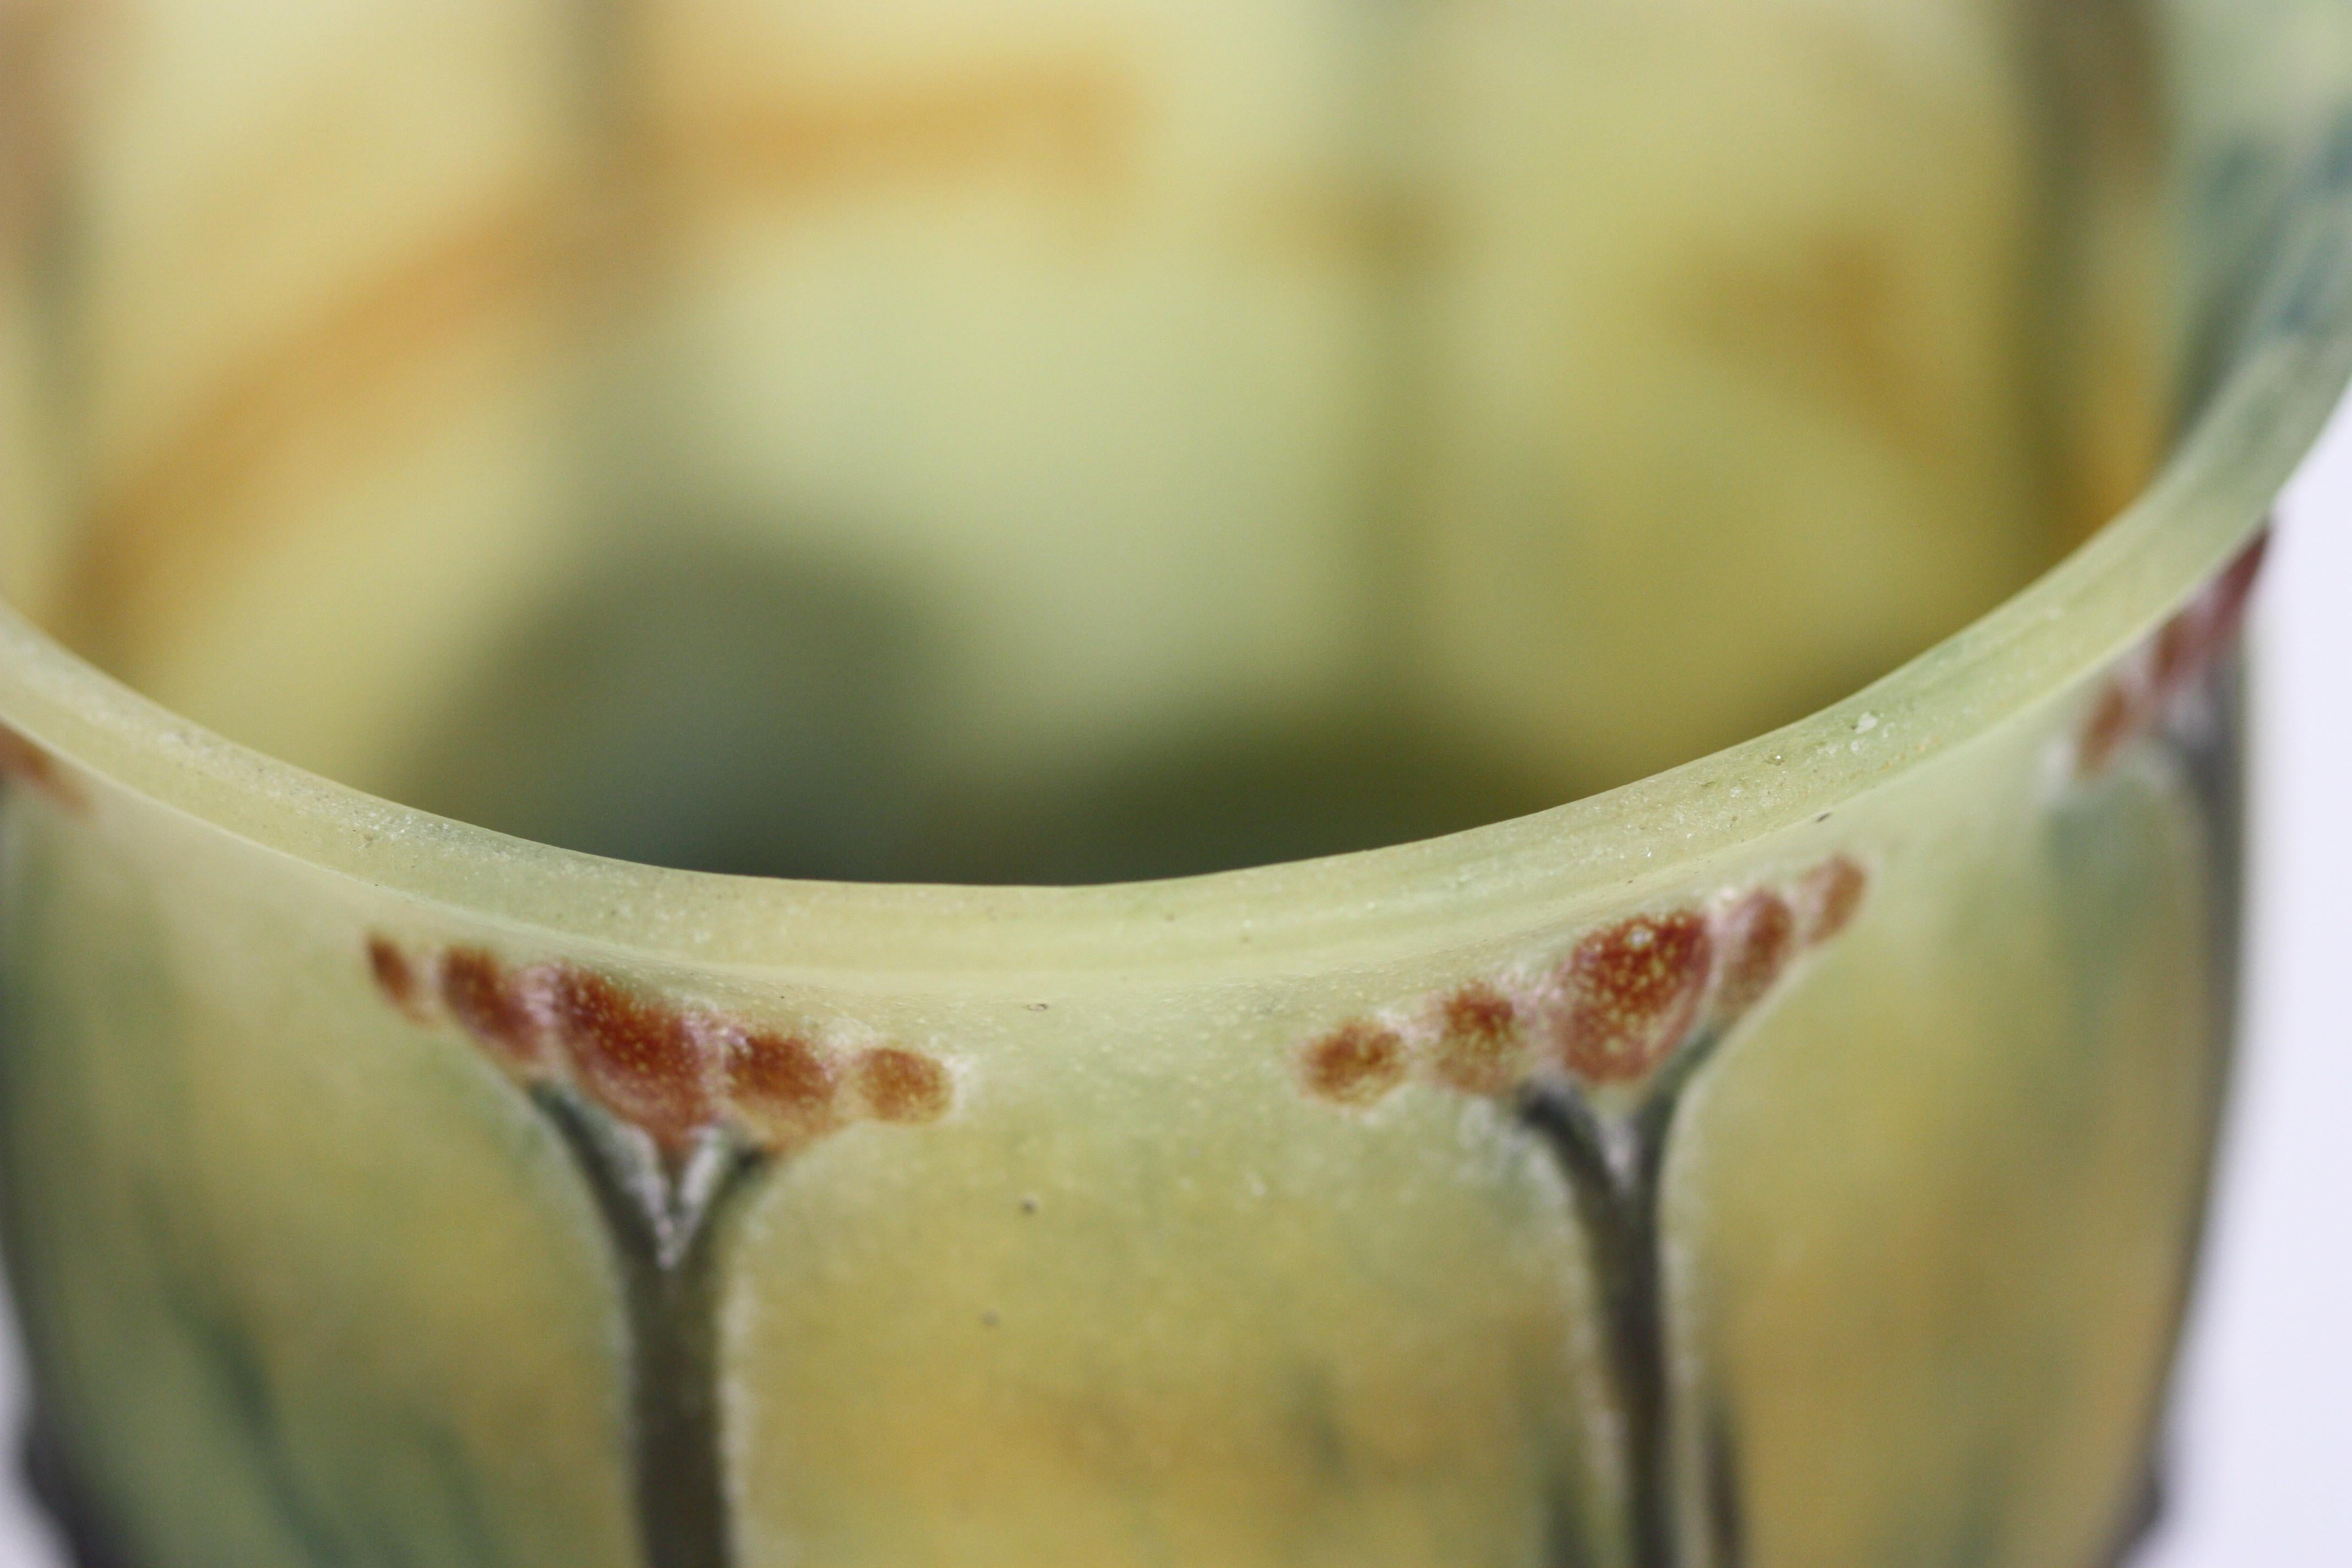  Almeric Walter Pate de verre Vase,
entwurf: Corretic, Frankreich, um 1925
gegossene Markierung
A Walter/Nancy, Corretic/Sc.
Maße: Höhe 4,56 in. (11,6 cm.)
Umfang 4,75 in. (12,1 cm.)
Sockel 2,75 Zoll. (7 cm.).
   